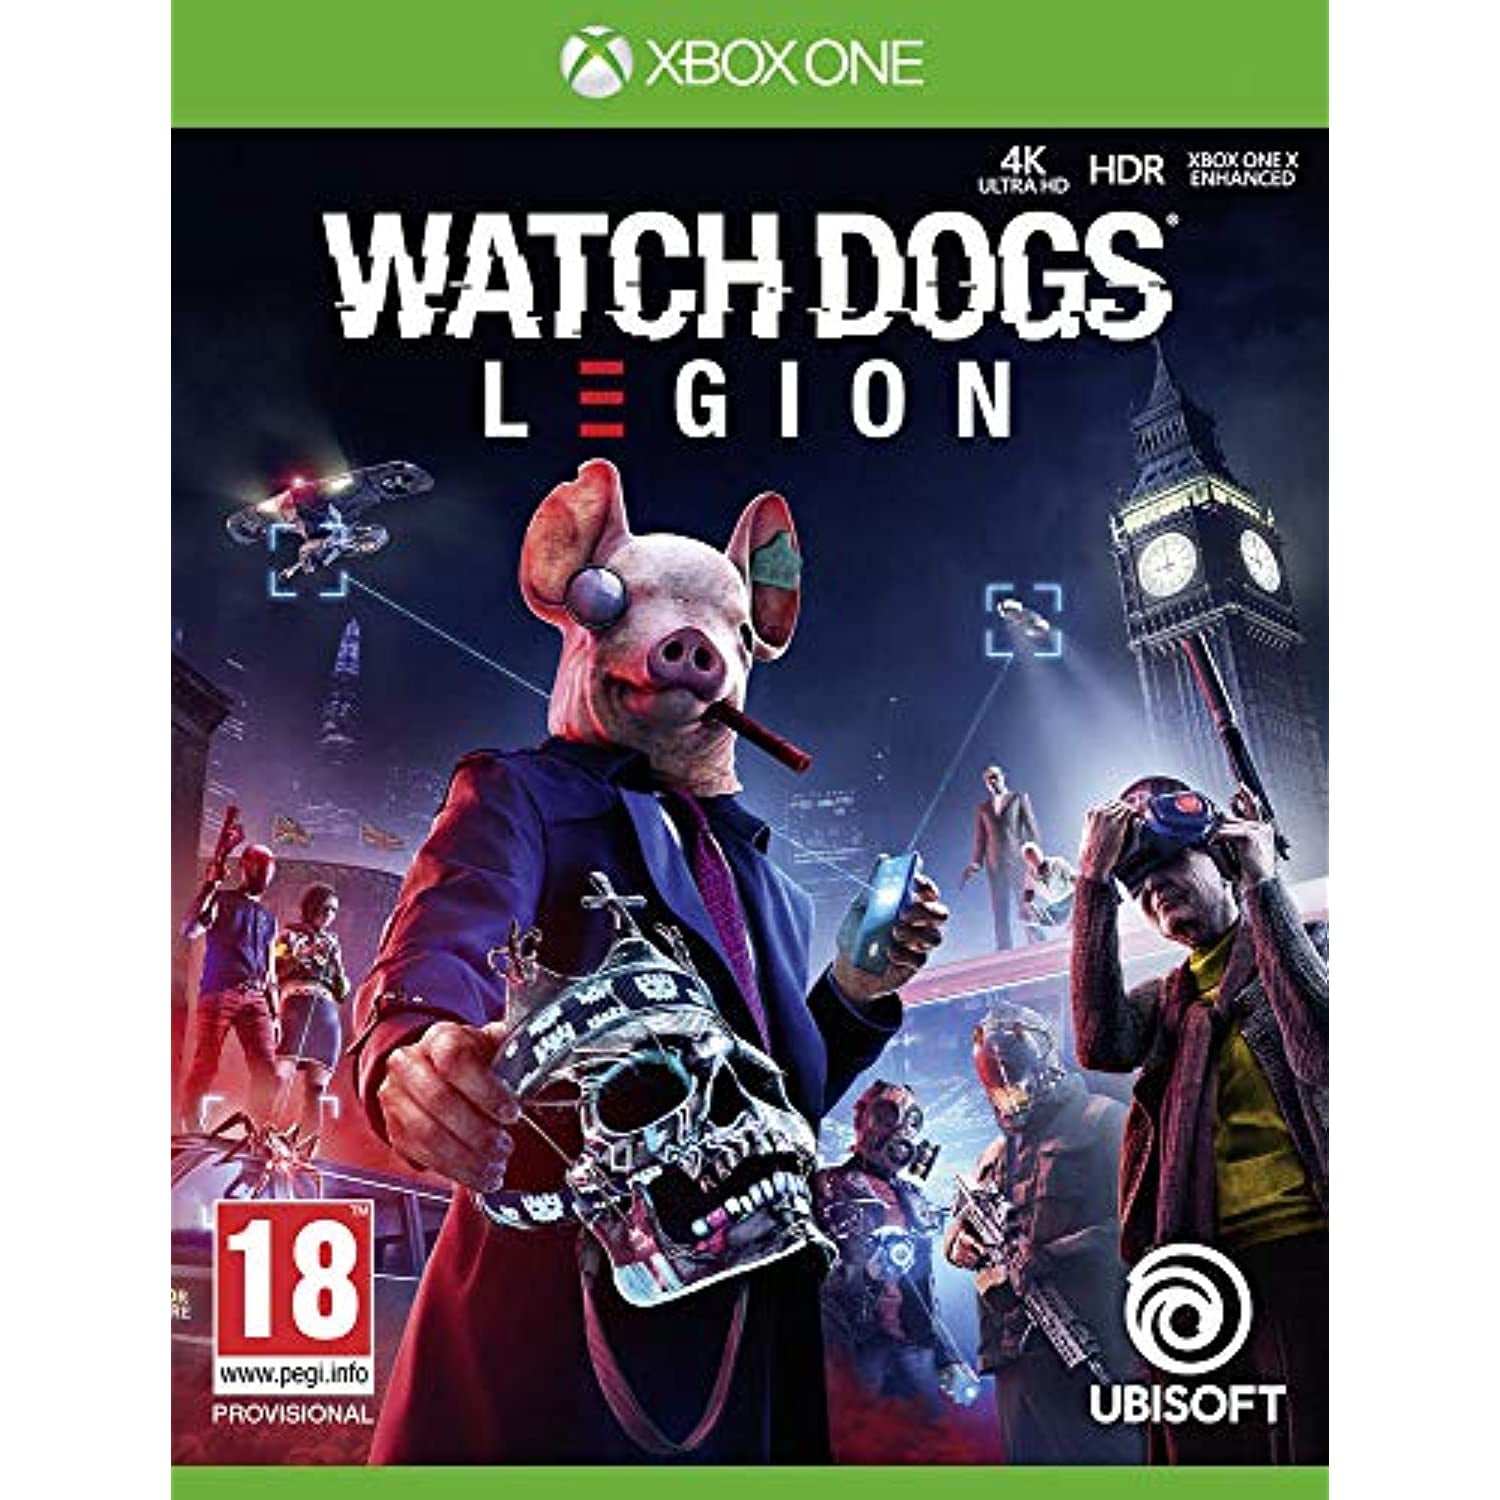 Ps4 watch Dogs Legion. Watch Dogs диск ps4. Вотч догс Легион иксбокс. Watch Dogs Xbox one. Ubisoft ps4